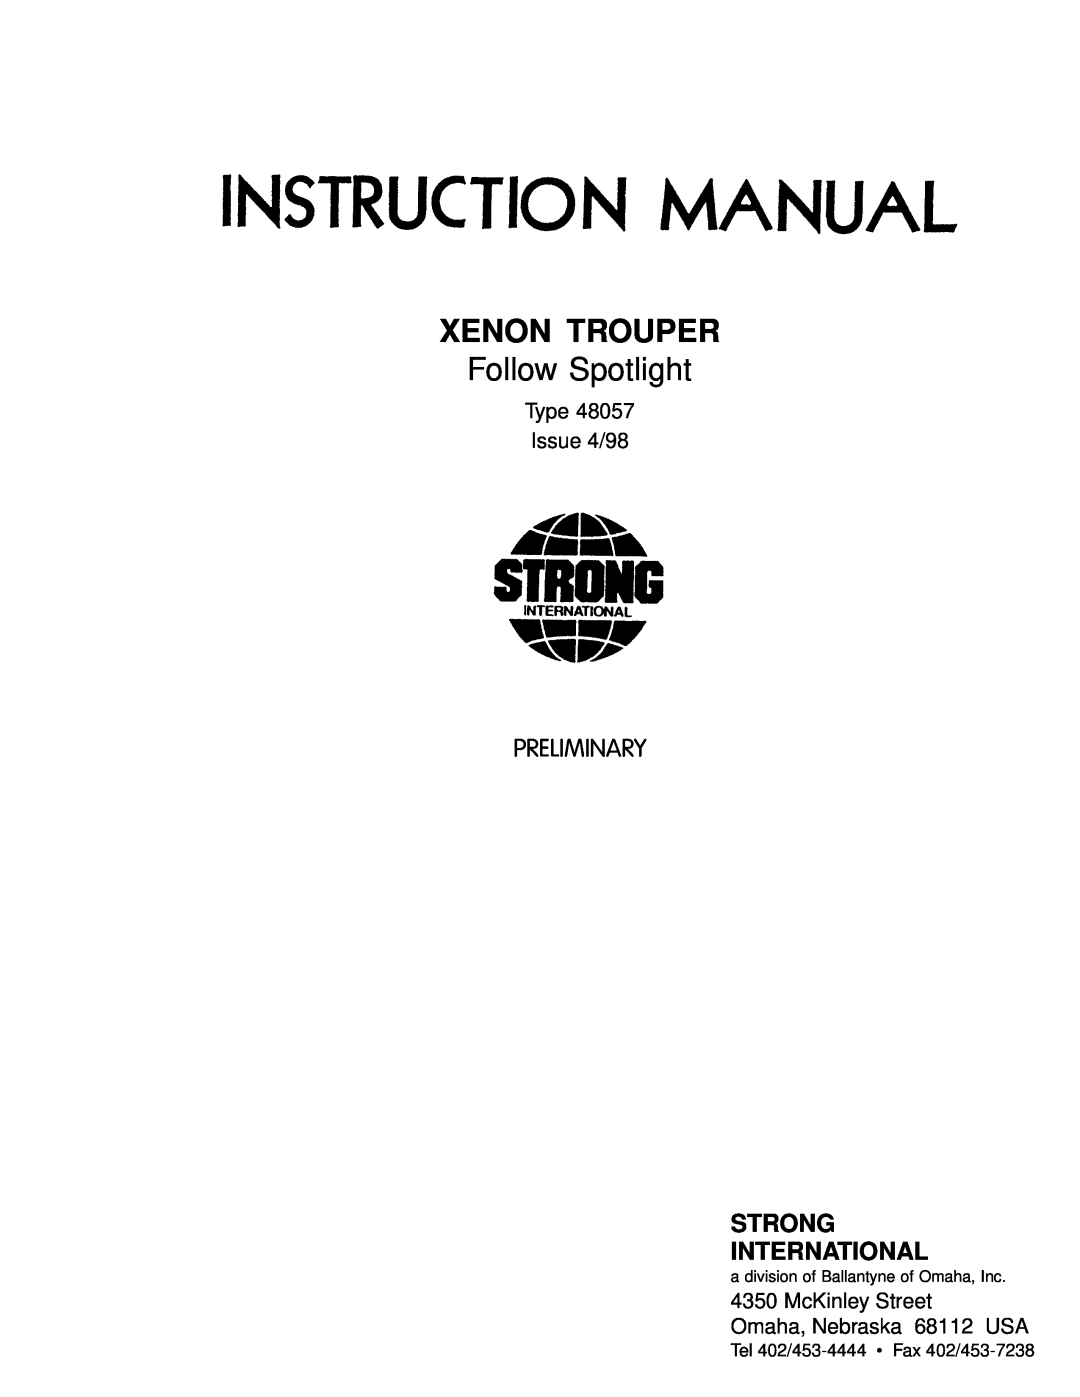 Strong Enterprises 48057 manual Type Issue 4/98, McKinley Street Omaha, Nebraska 68112 USA, Xenon Trouper, Preliminary 